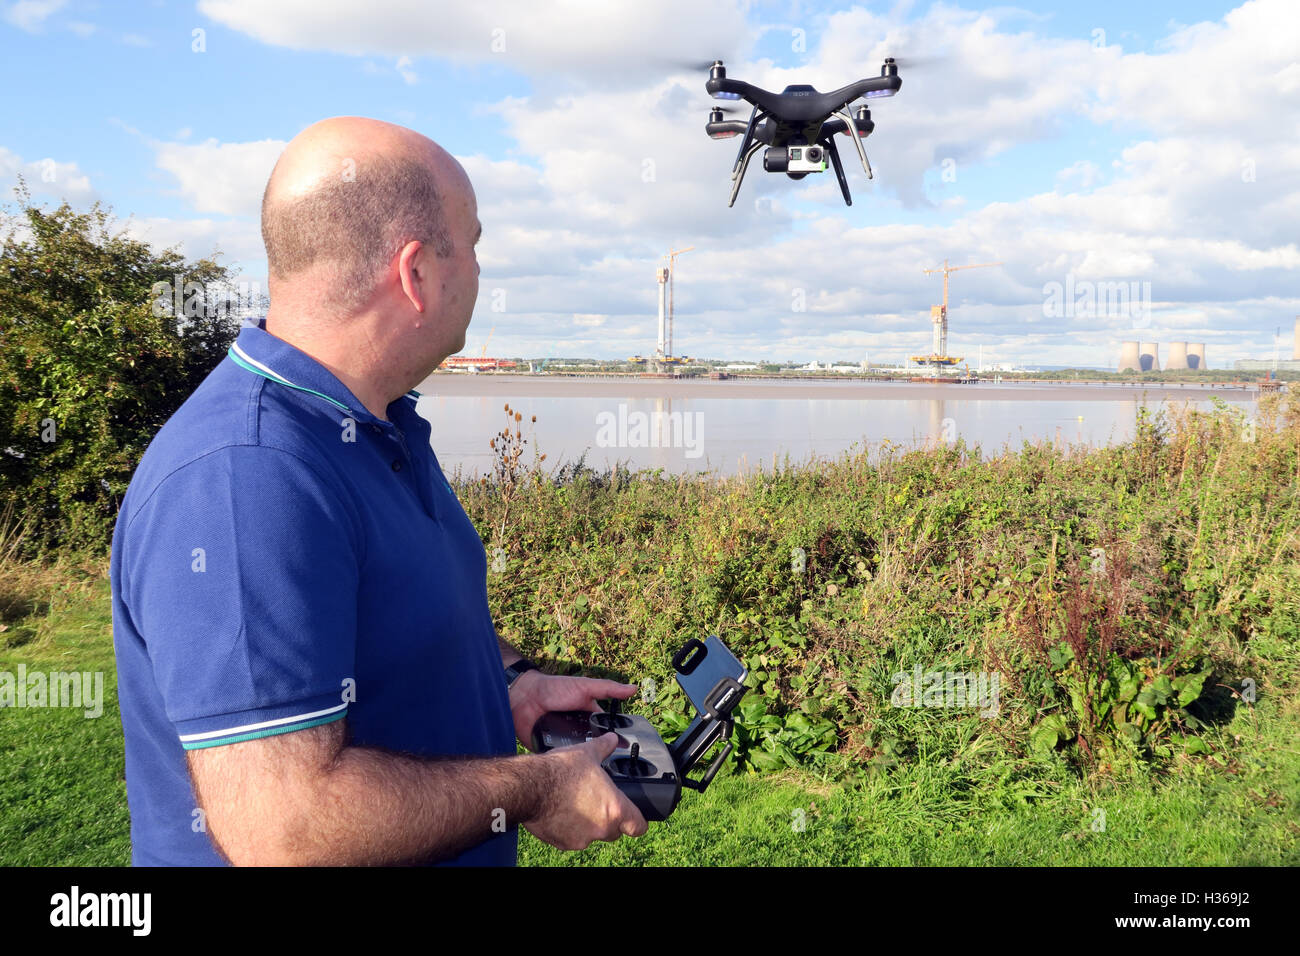 Homme volant 3dr RTF X8 drone, près de River Mersey, Runcorn, Merseyside, Angleterre, ROYAUME-UNI Banque D'Images